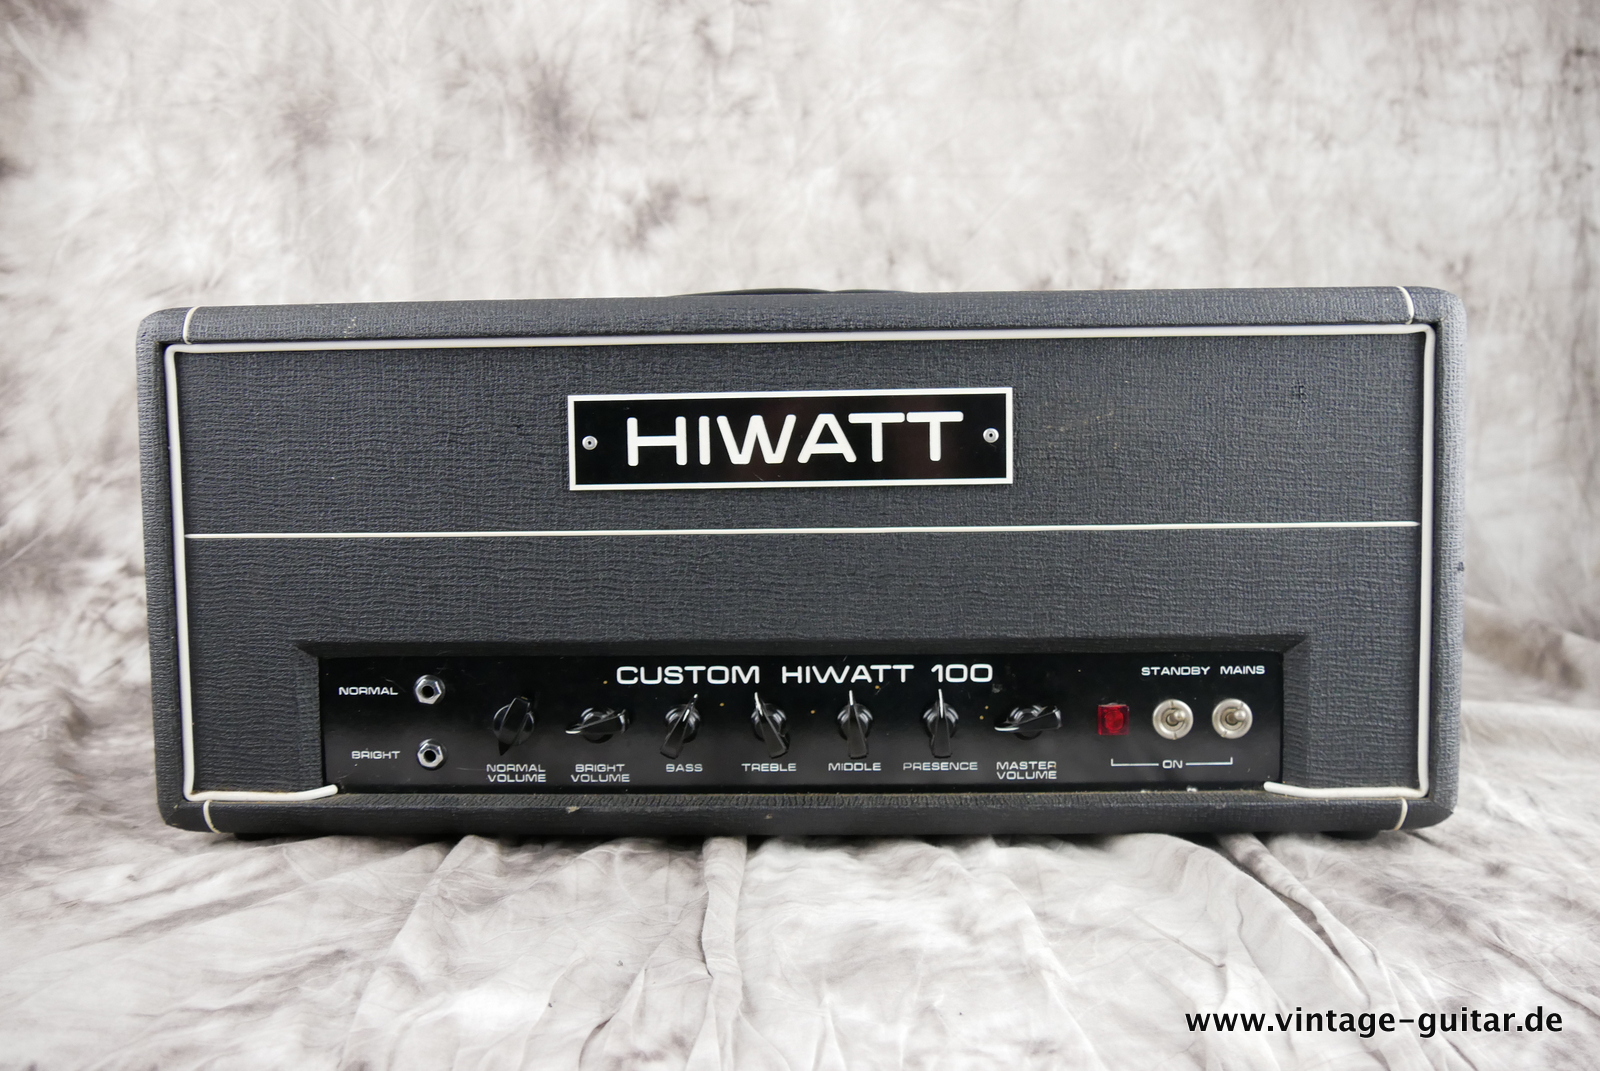 Hiwatt_Custom_100_small_housing_black_1977-001.JPG